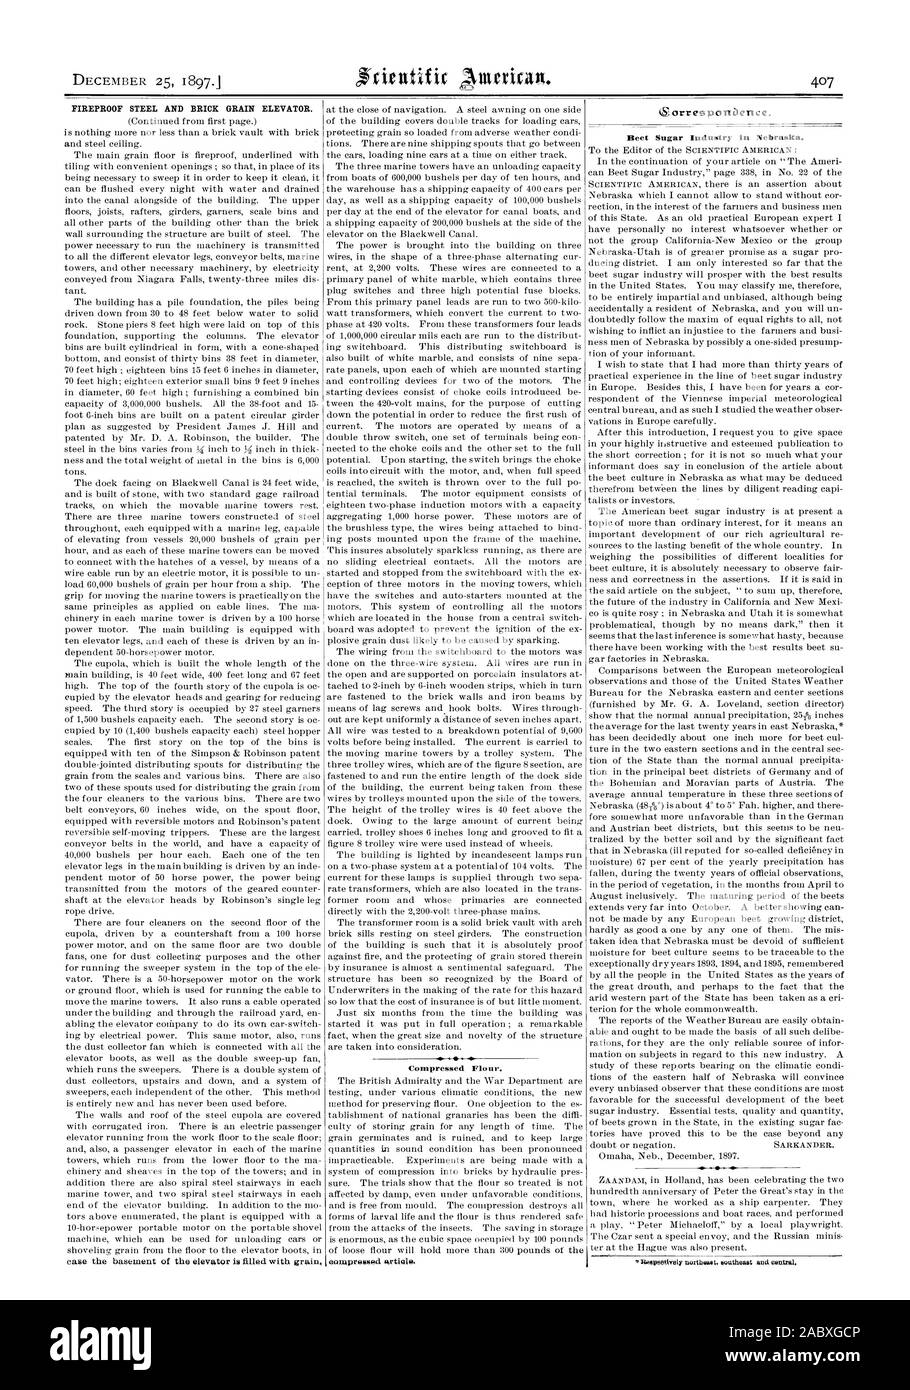 Komprimierte Mehl. Zuckerrüben Zuckerindustrie in Nebraska., Scientific American, 1897-12-25 Stockfoto